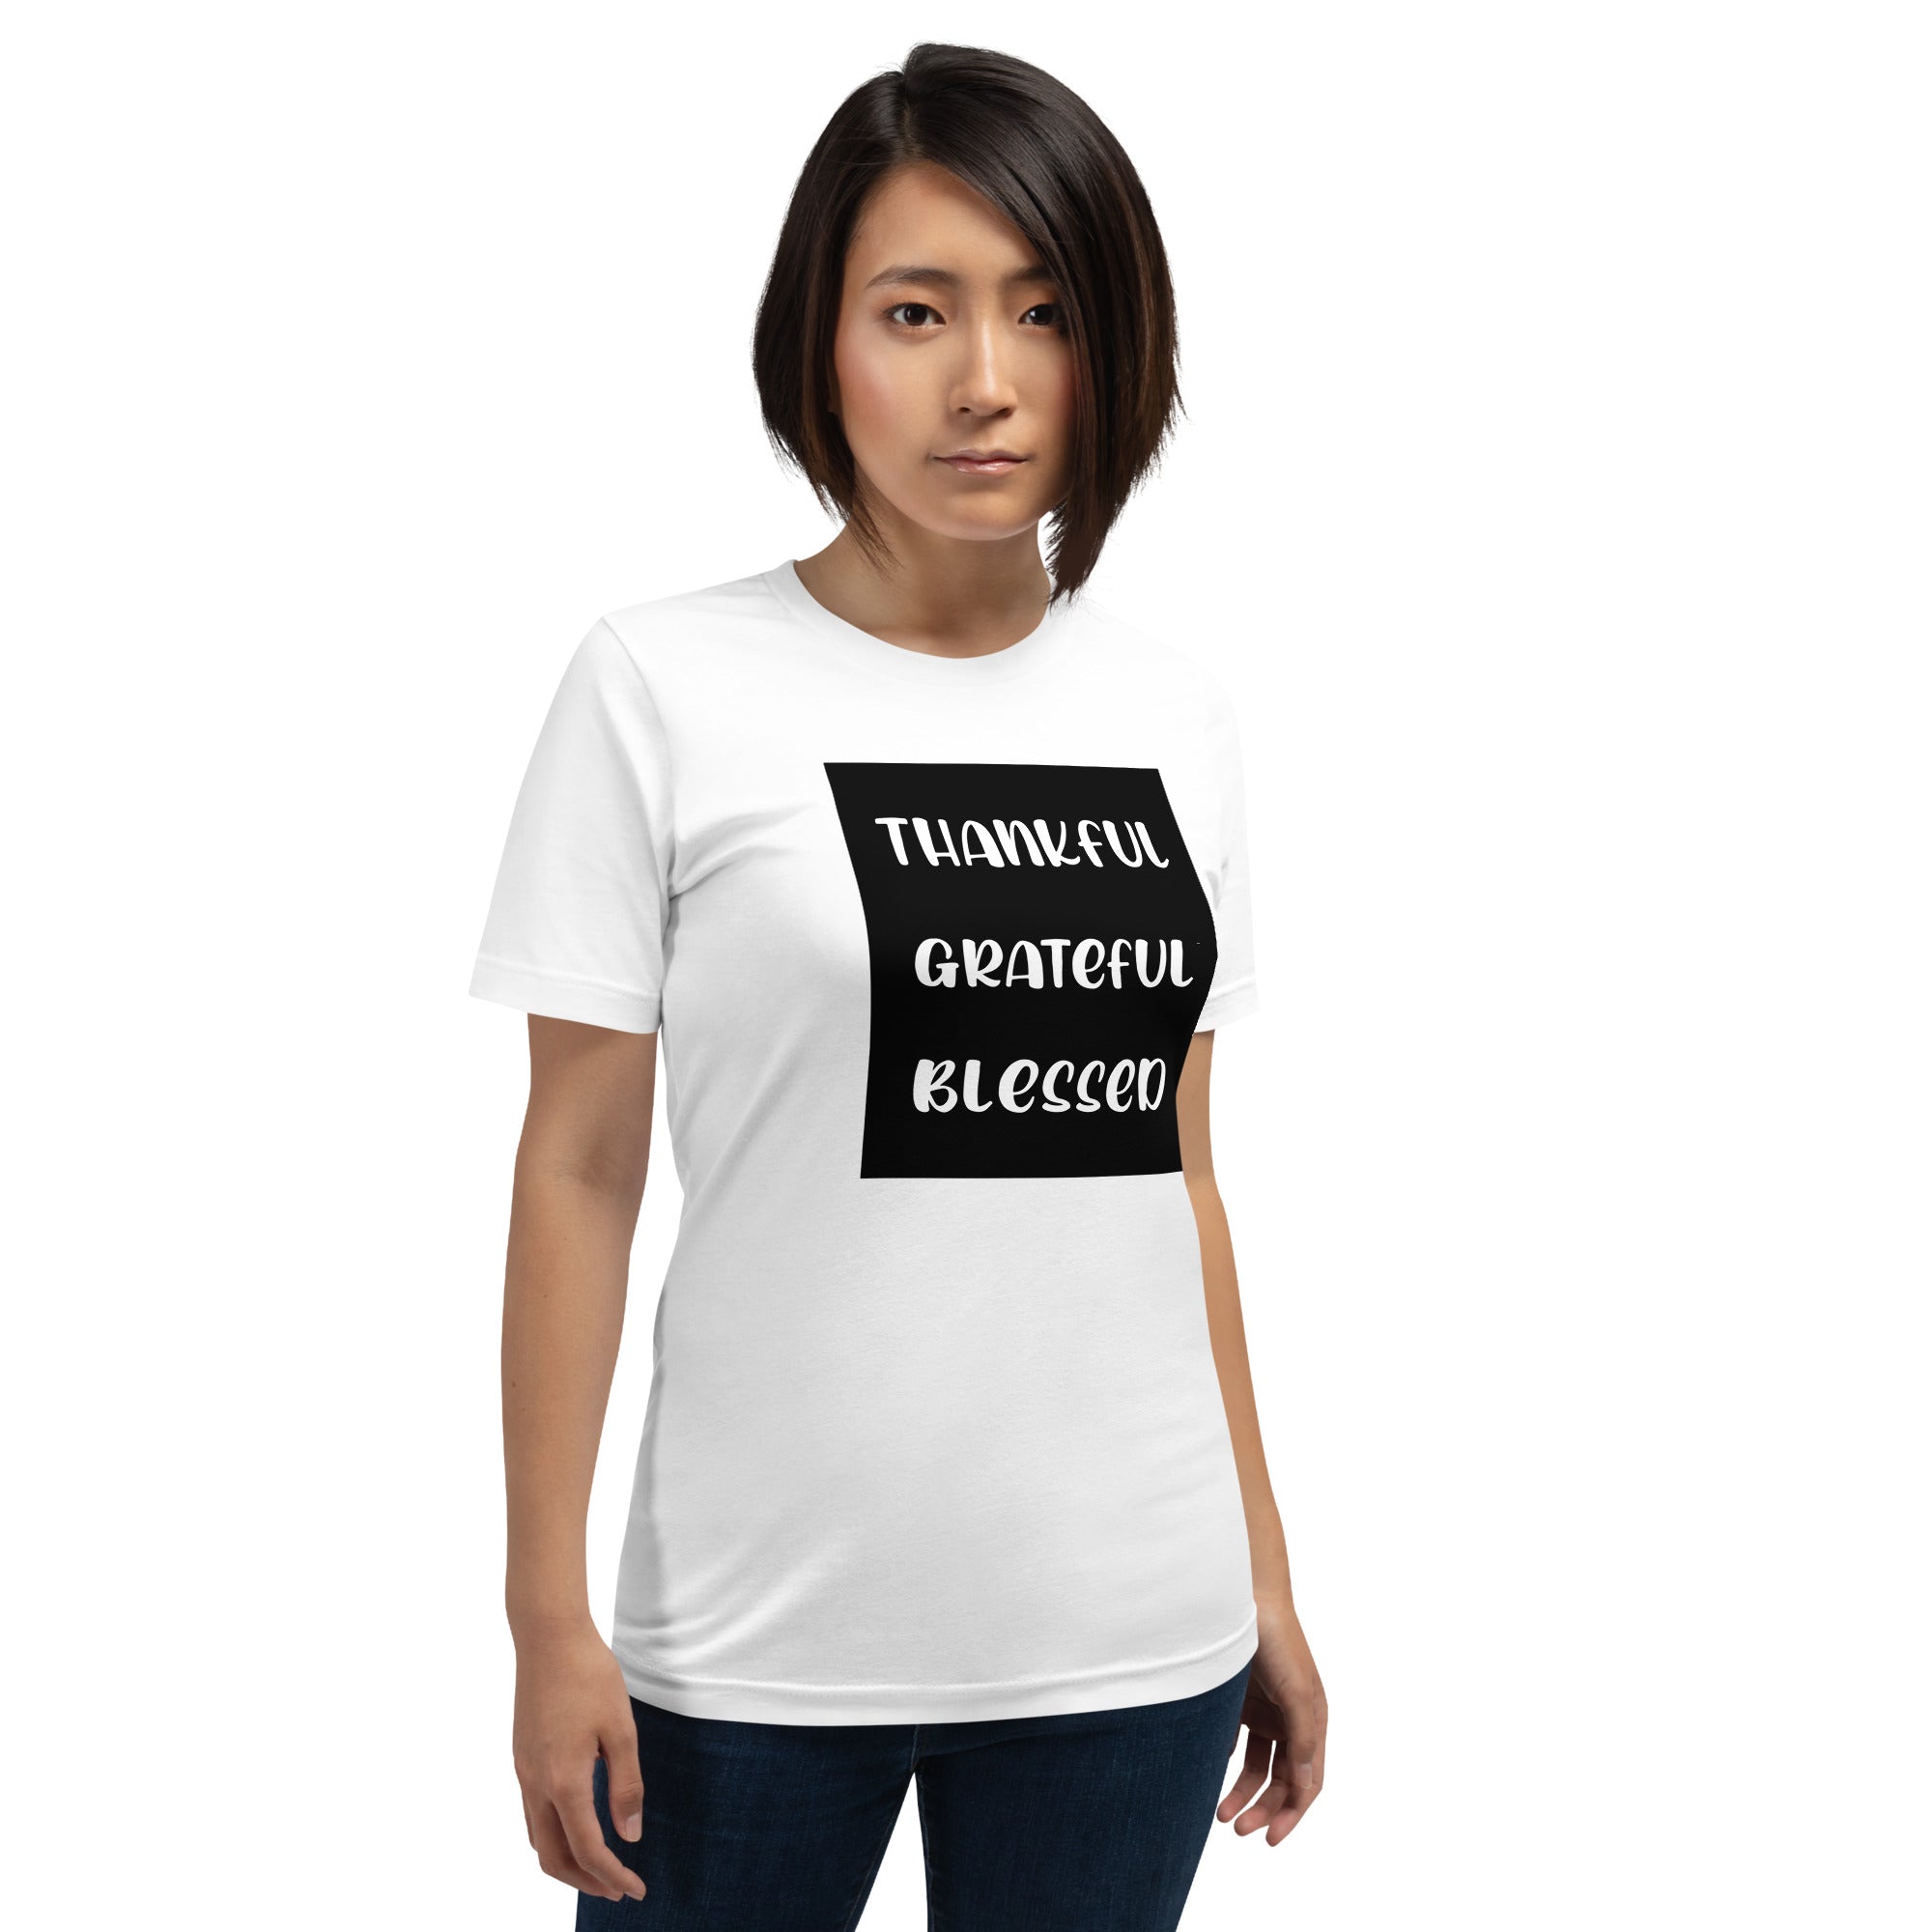 Women's Short-Sleeve graphic t-shirt